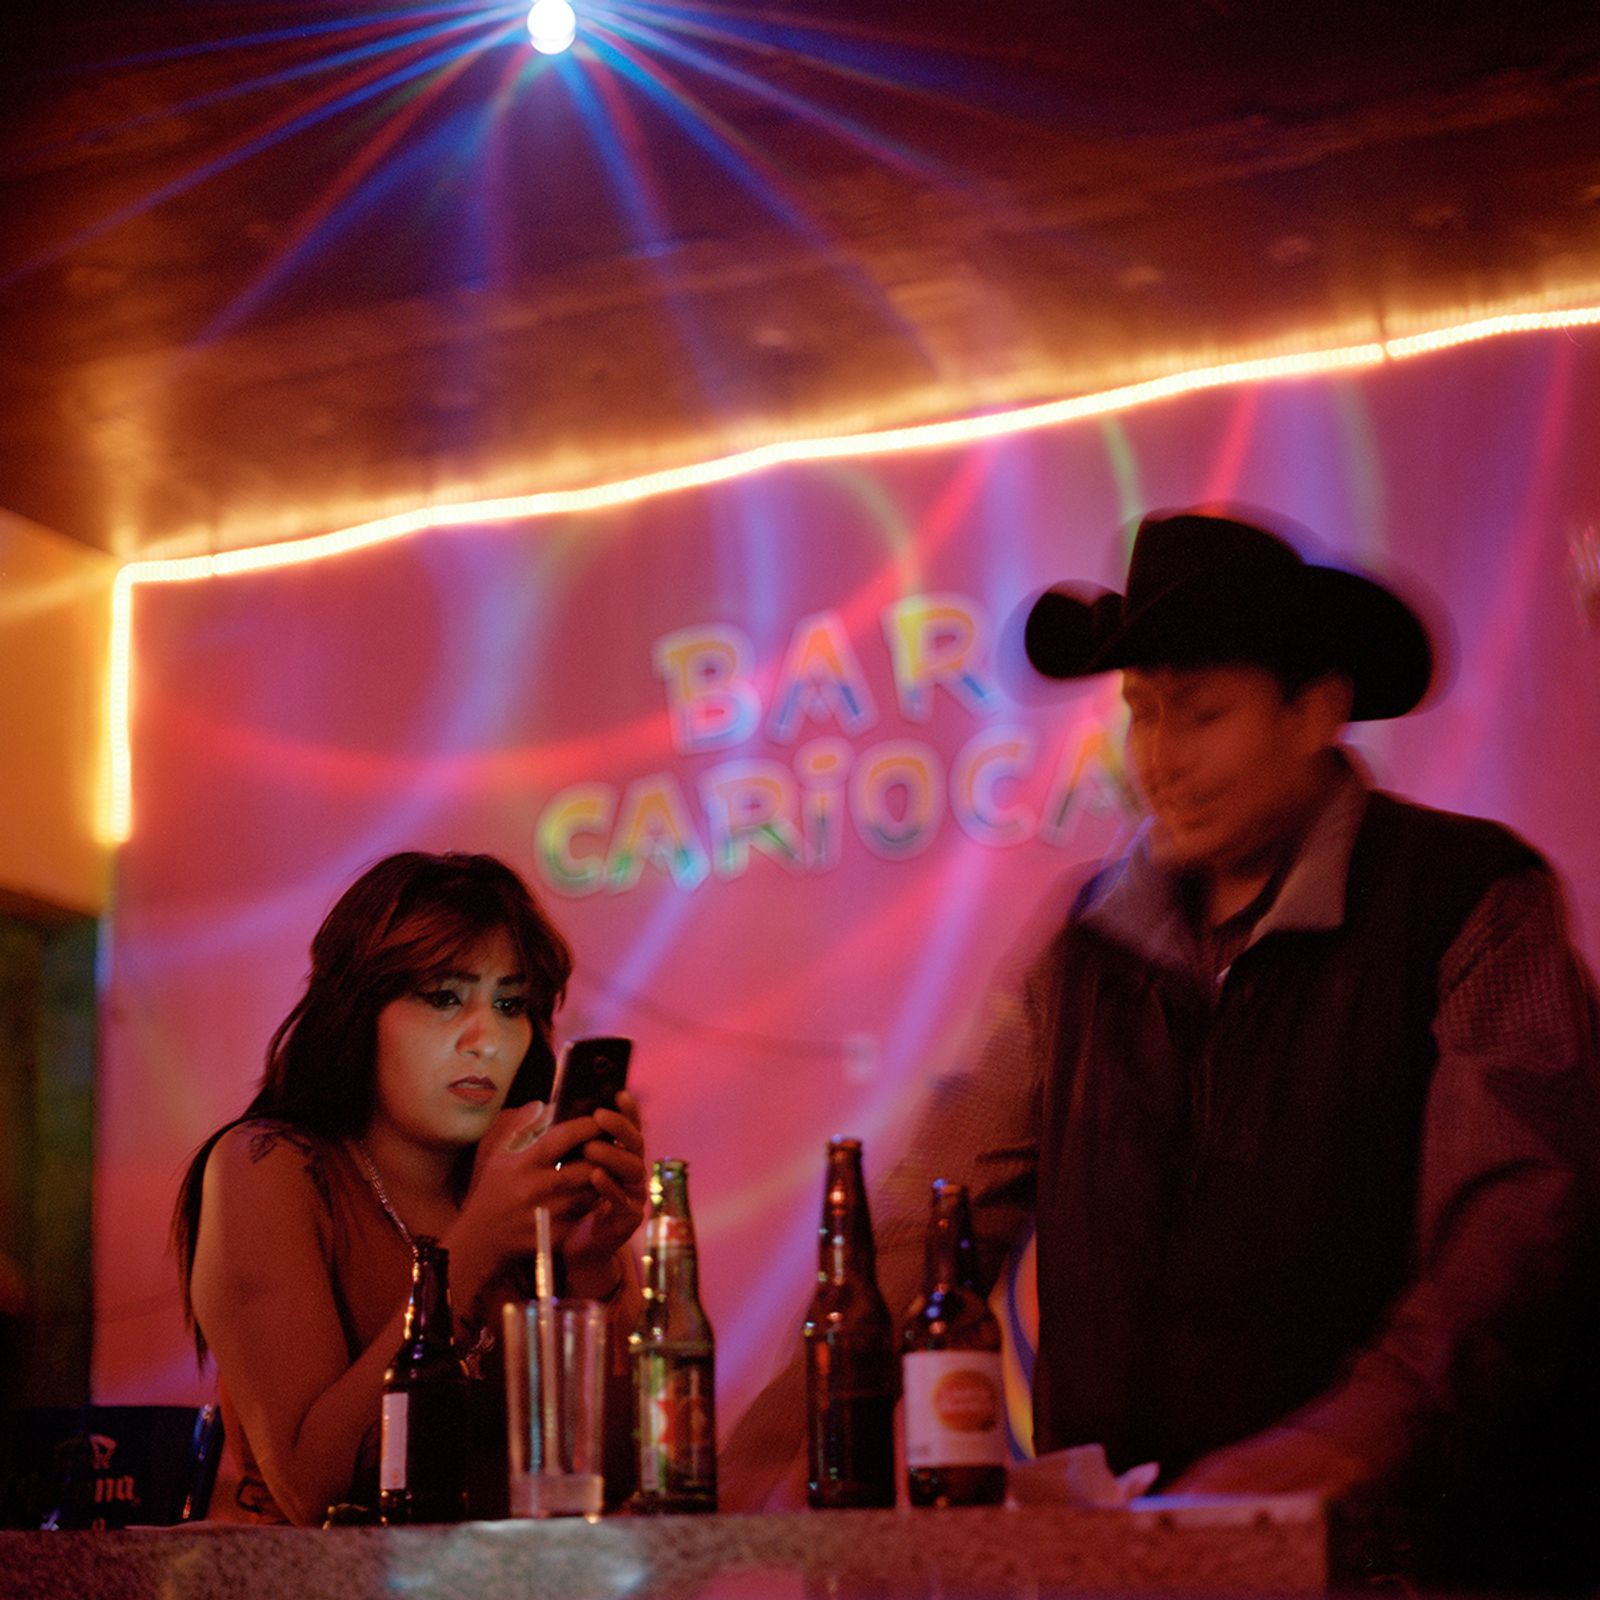 © Jordi Ruiz Cirera - A bar in downtown Ciudad Juarez